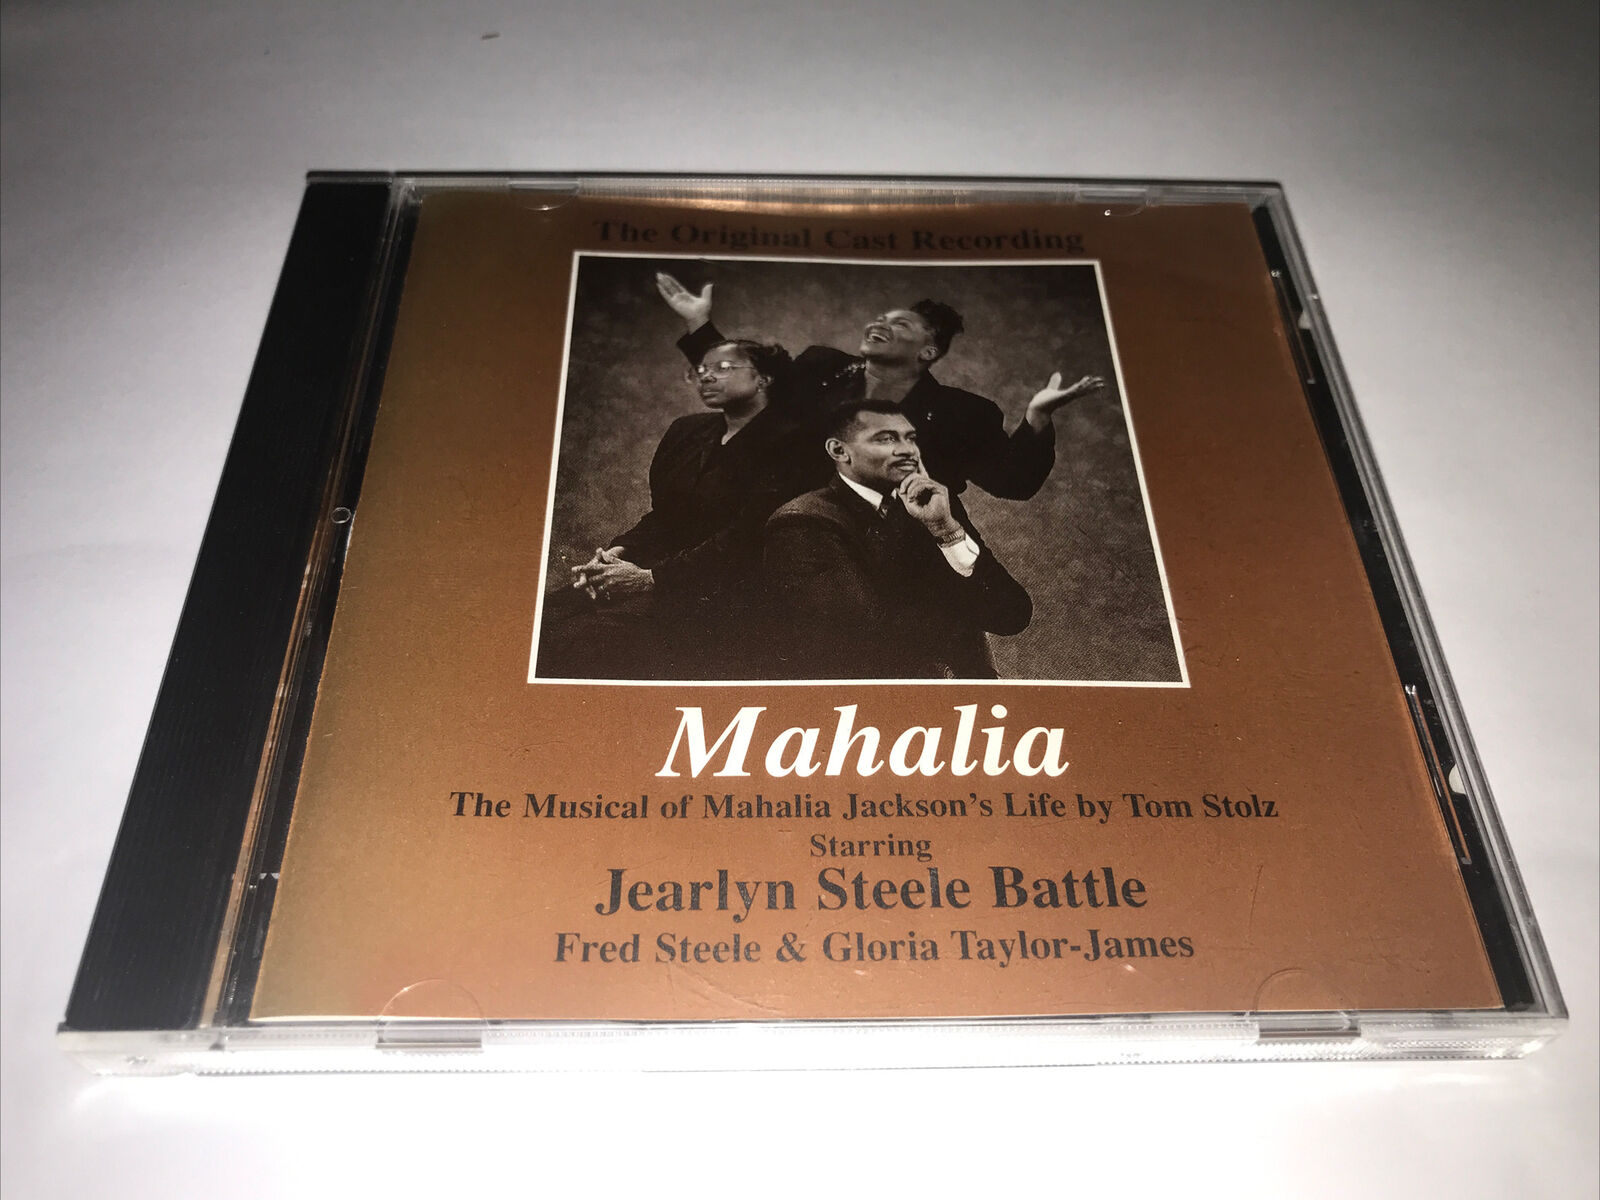 mahalia the musical of mahalia jackson’s life cd Very Hard To Find